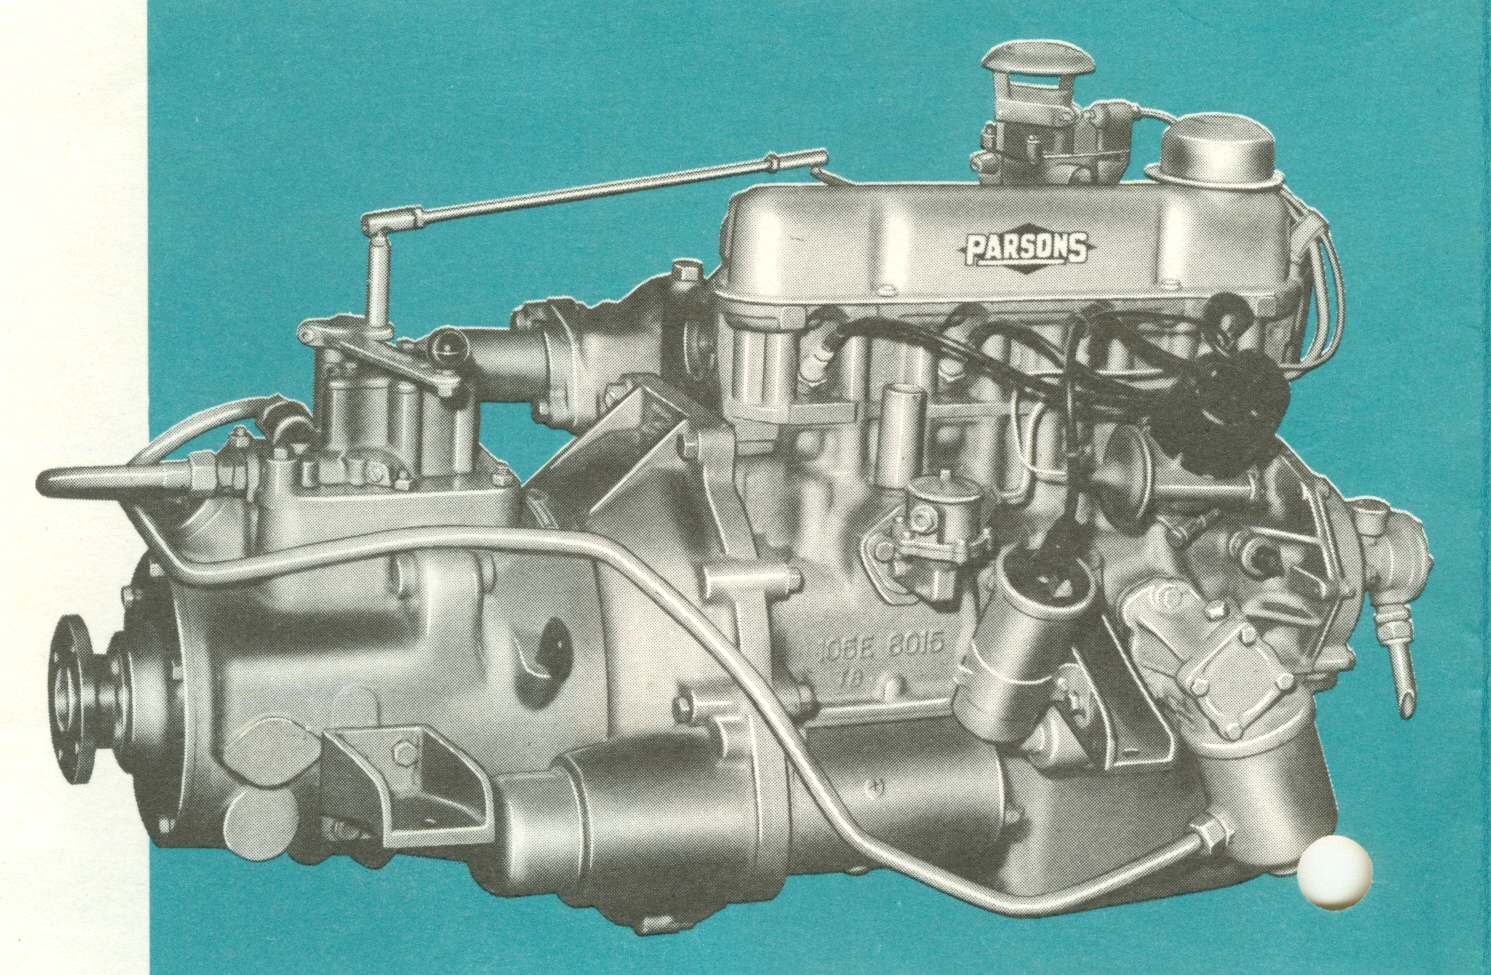 Parsons Sea Urchin engine